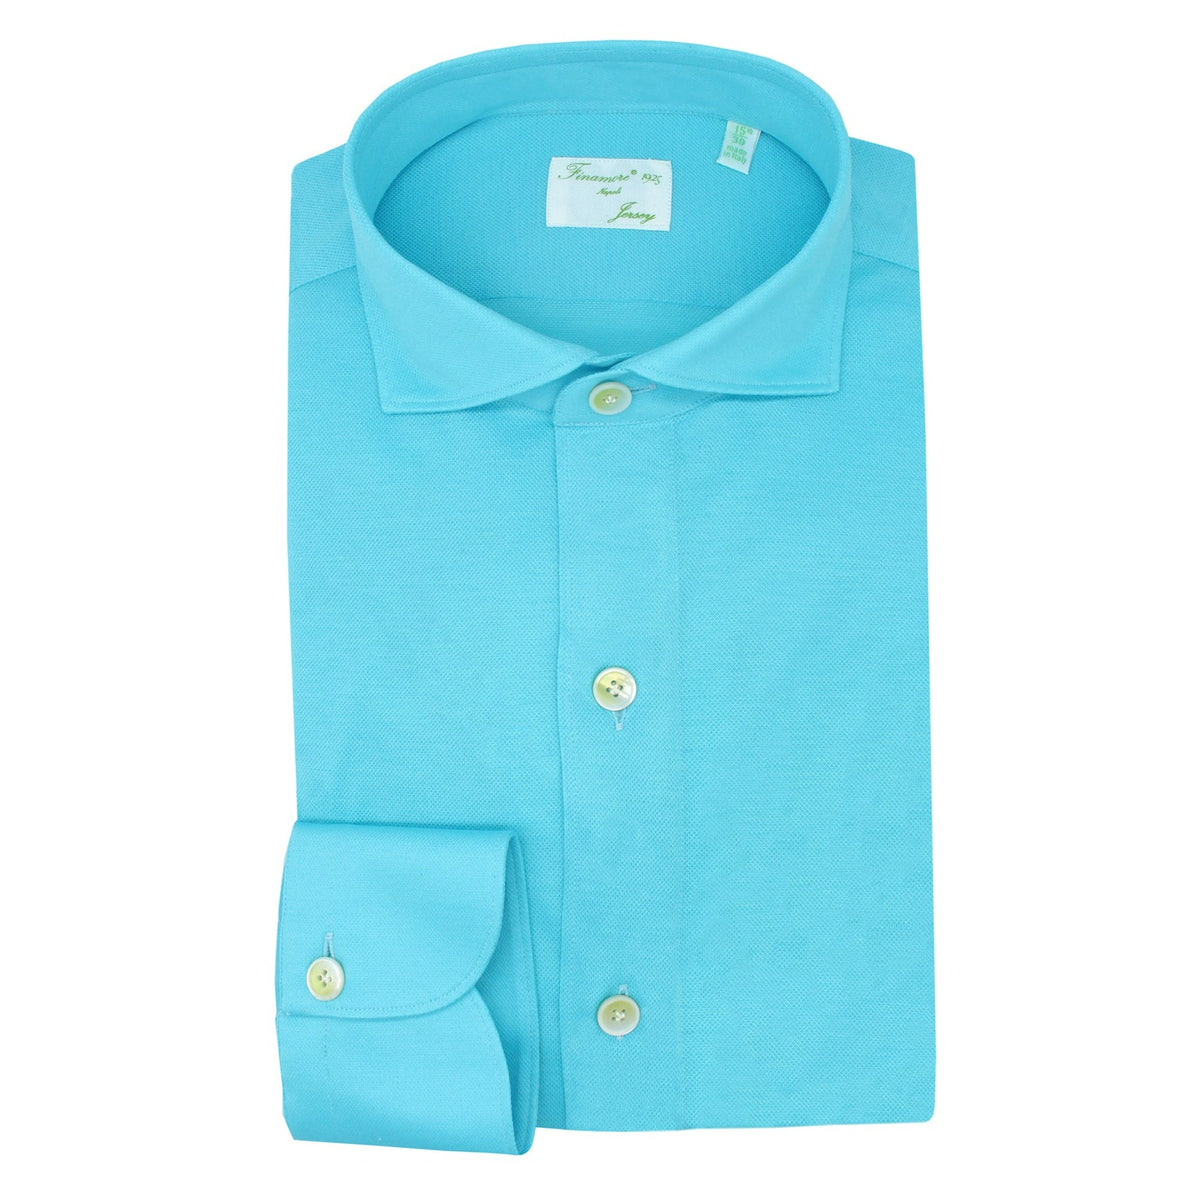 Toronto cotton jersey light blue slim fit shirt